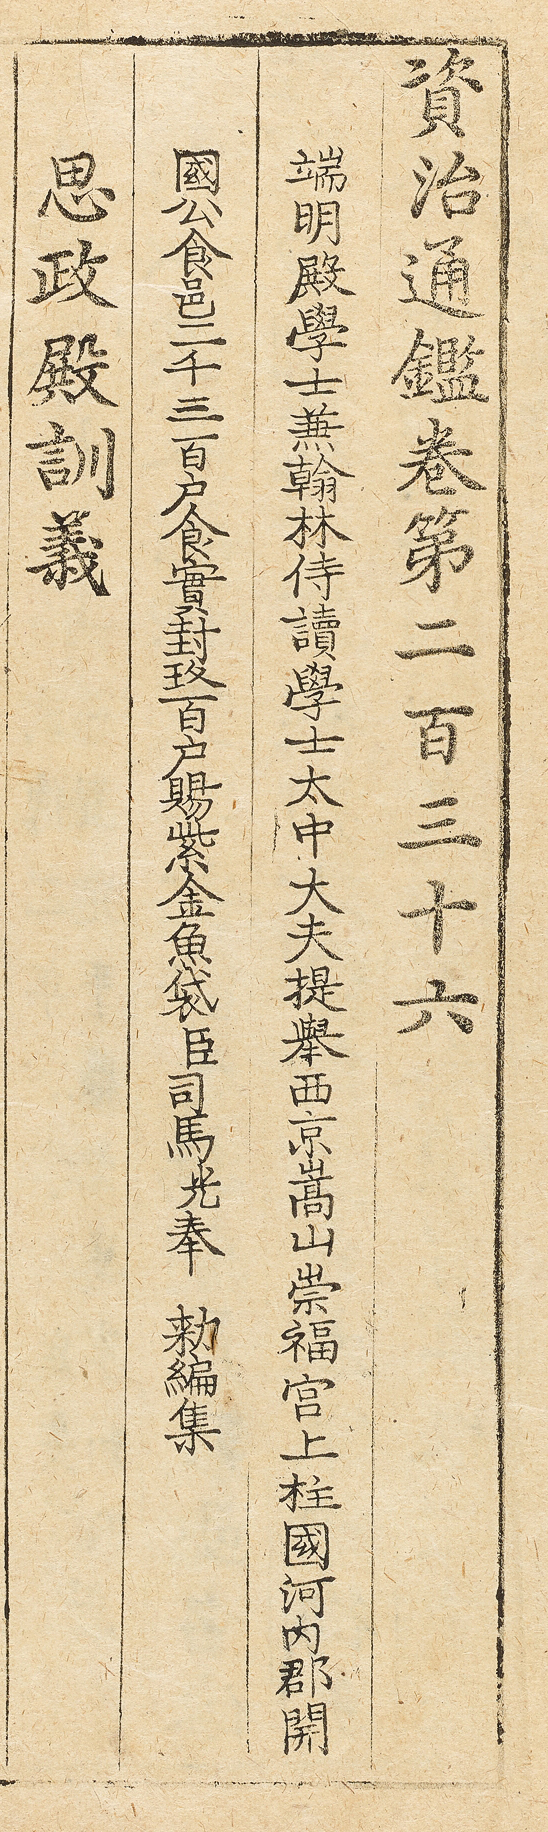 Sajeongjeon Edition of The Annotated Zizhi Tongjian (article 